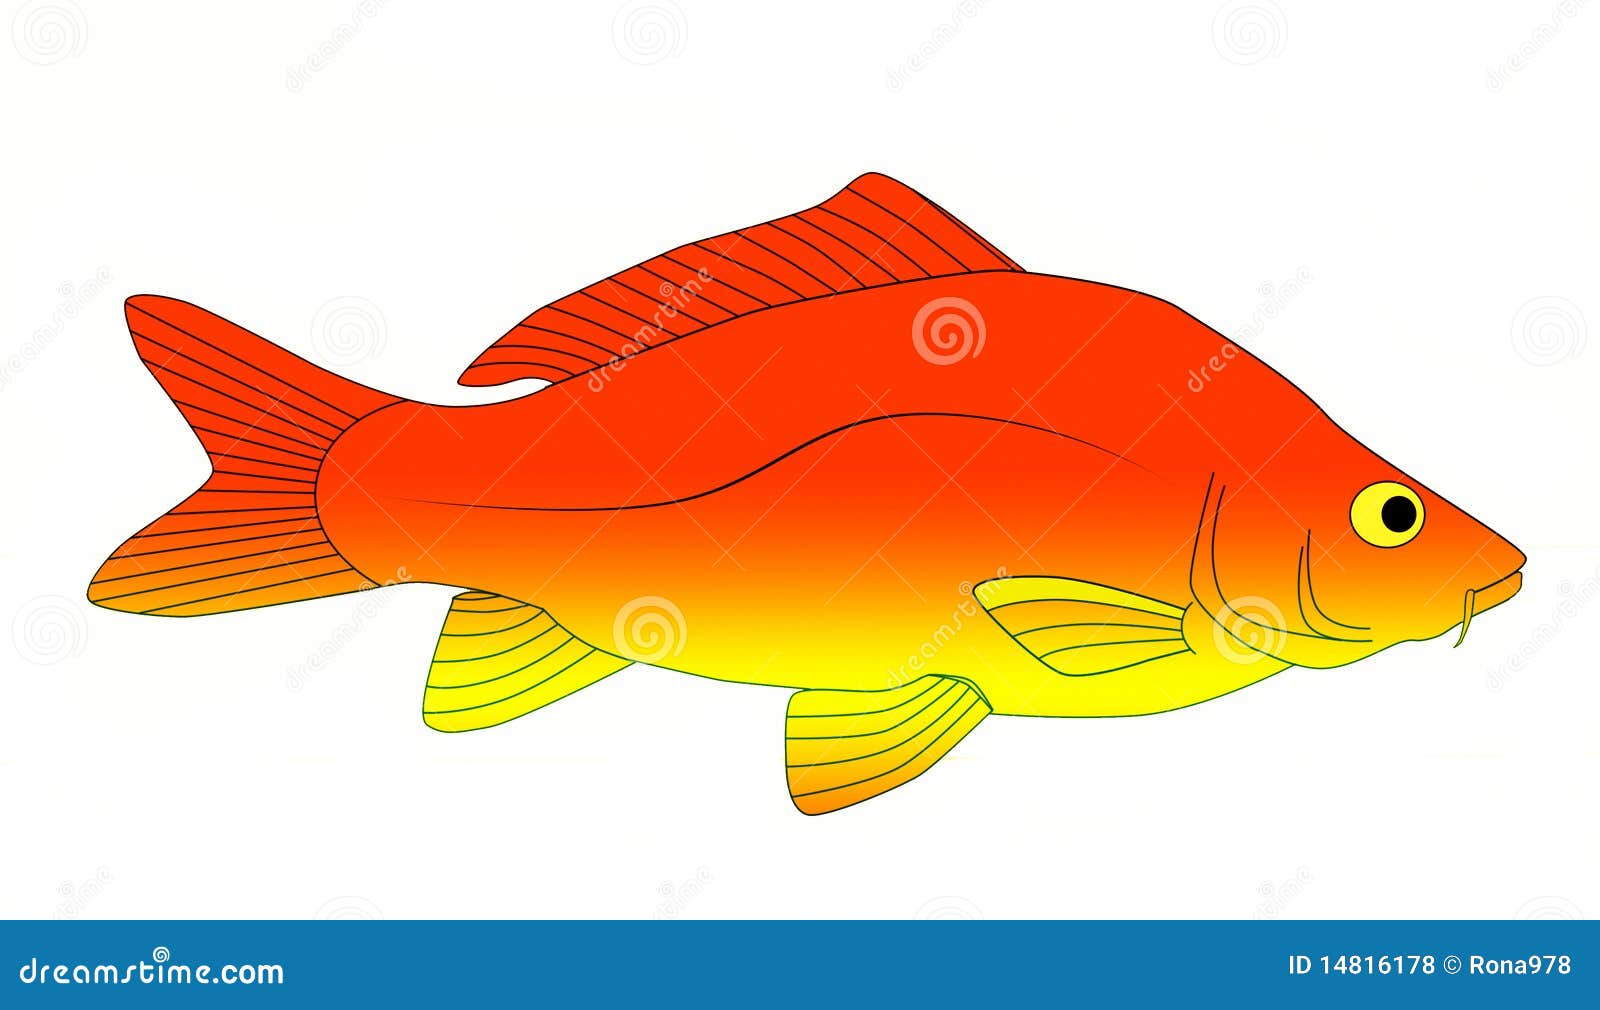 carp fish clip art free - photo #22